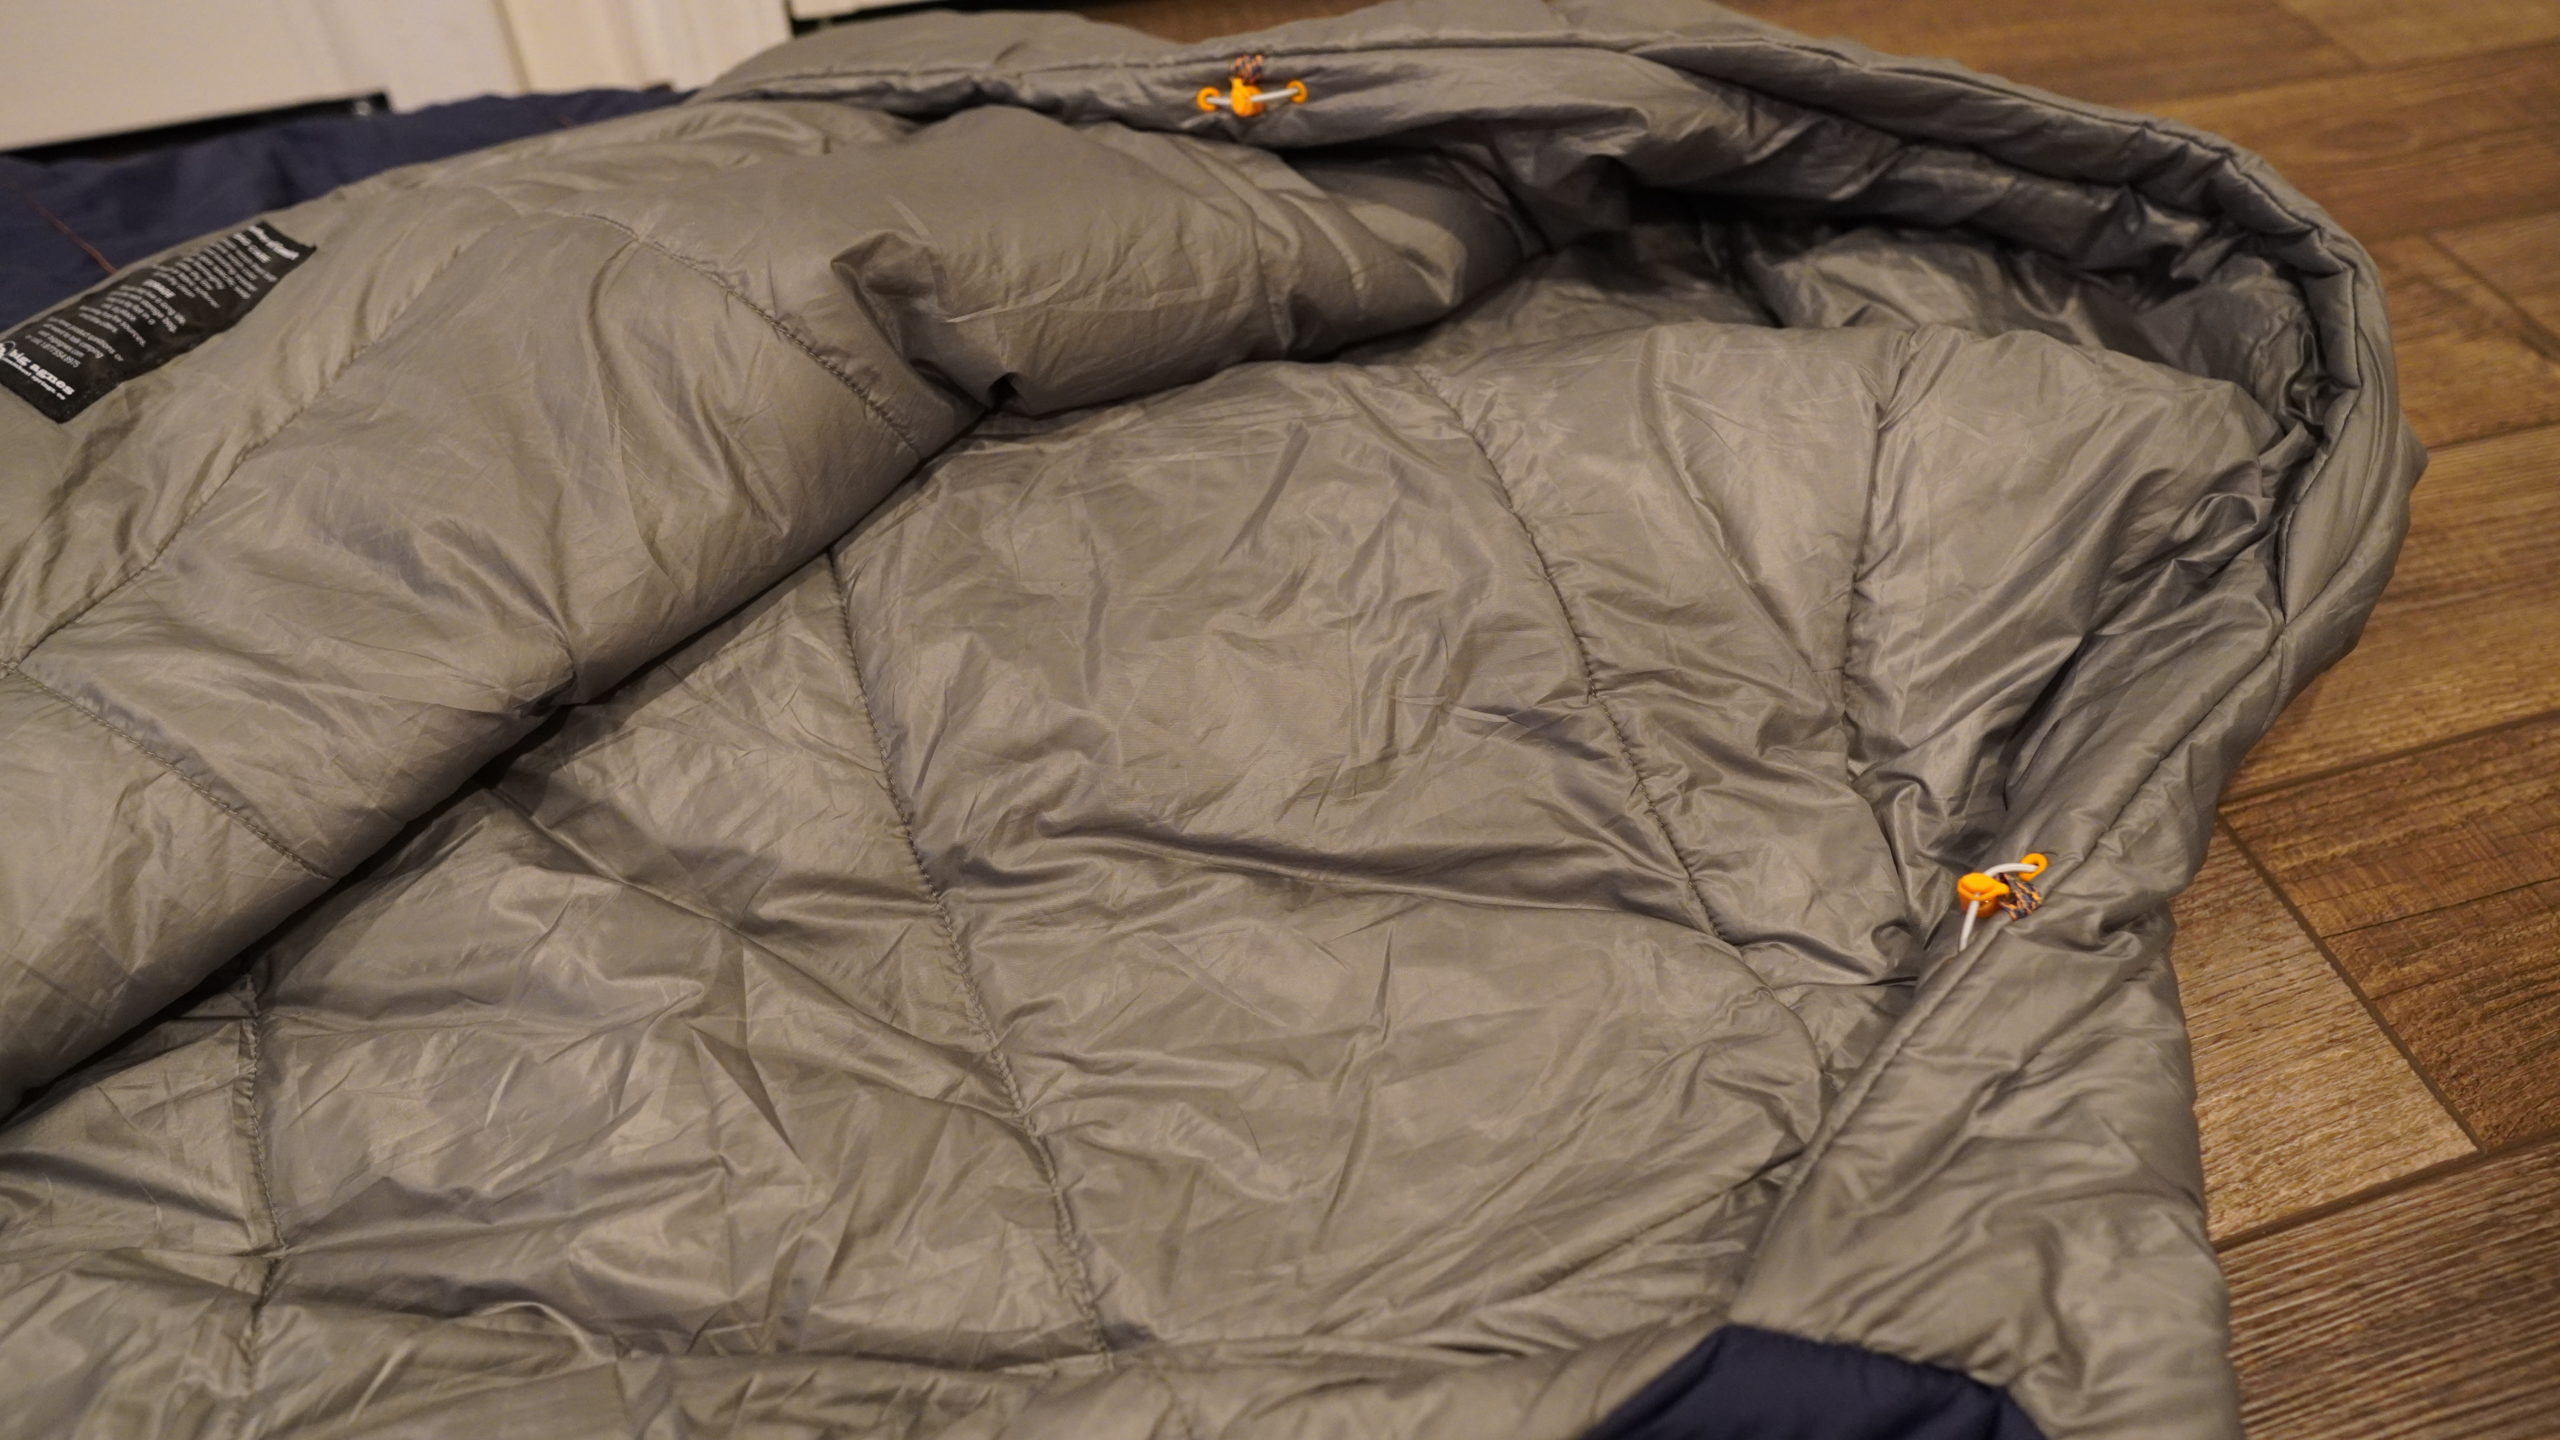 Gear Review: Big Agnes Sidewinder Sleeping Bag - Wide Open Spaces